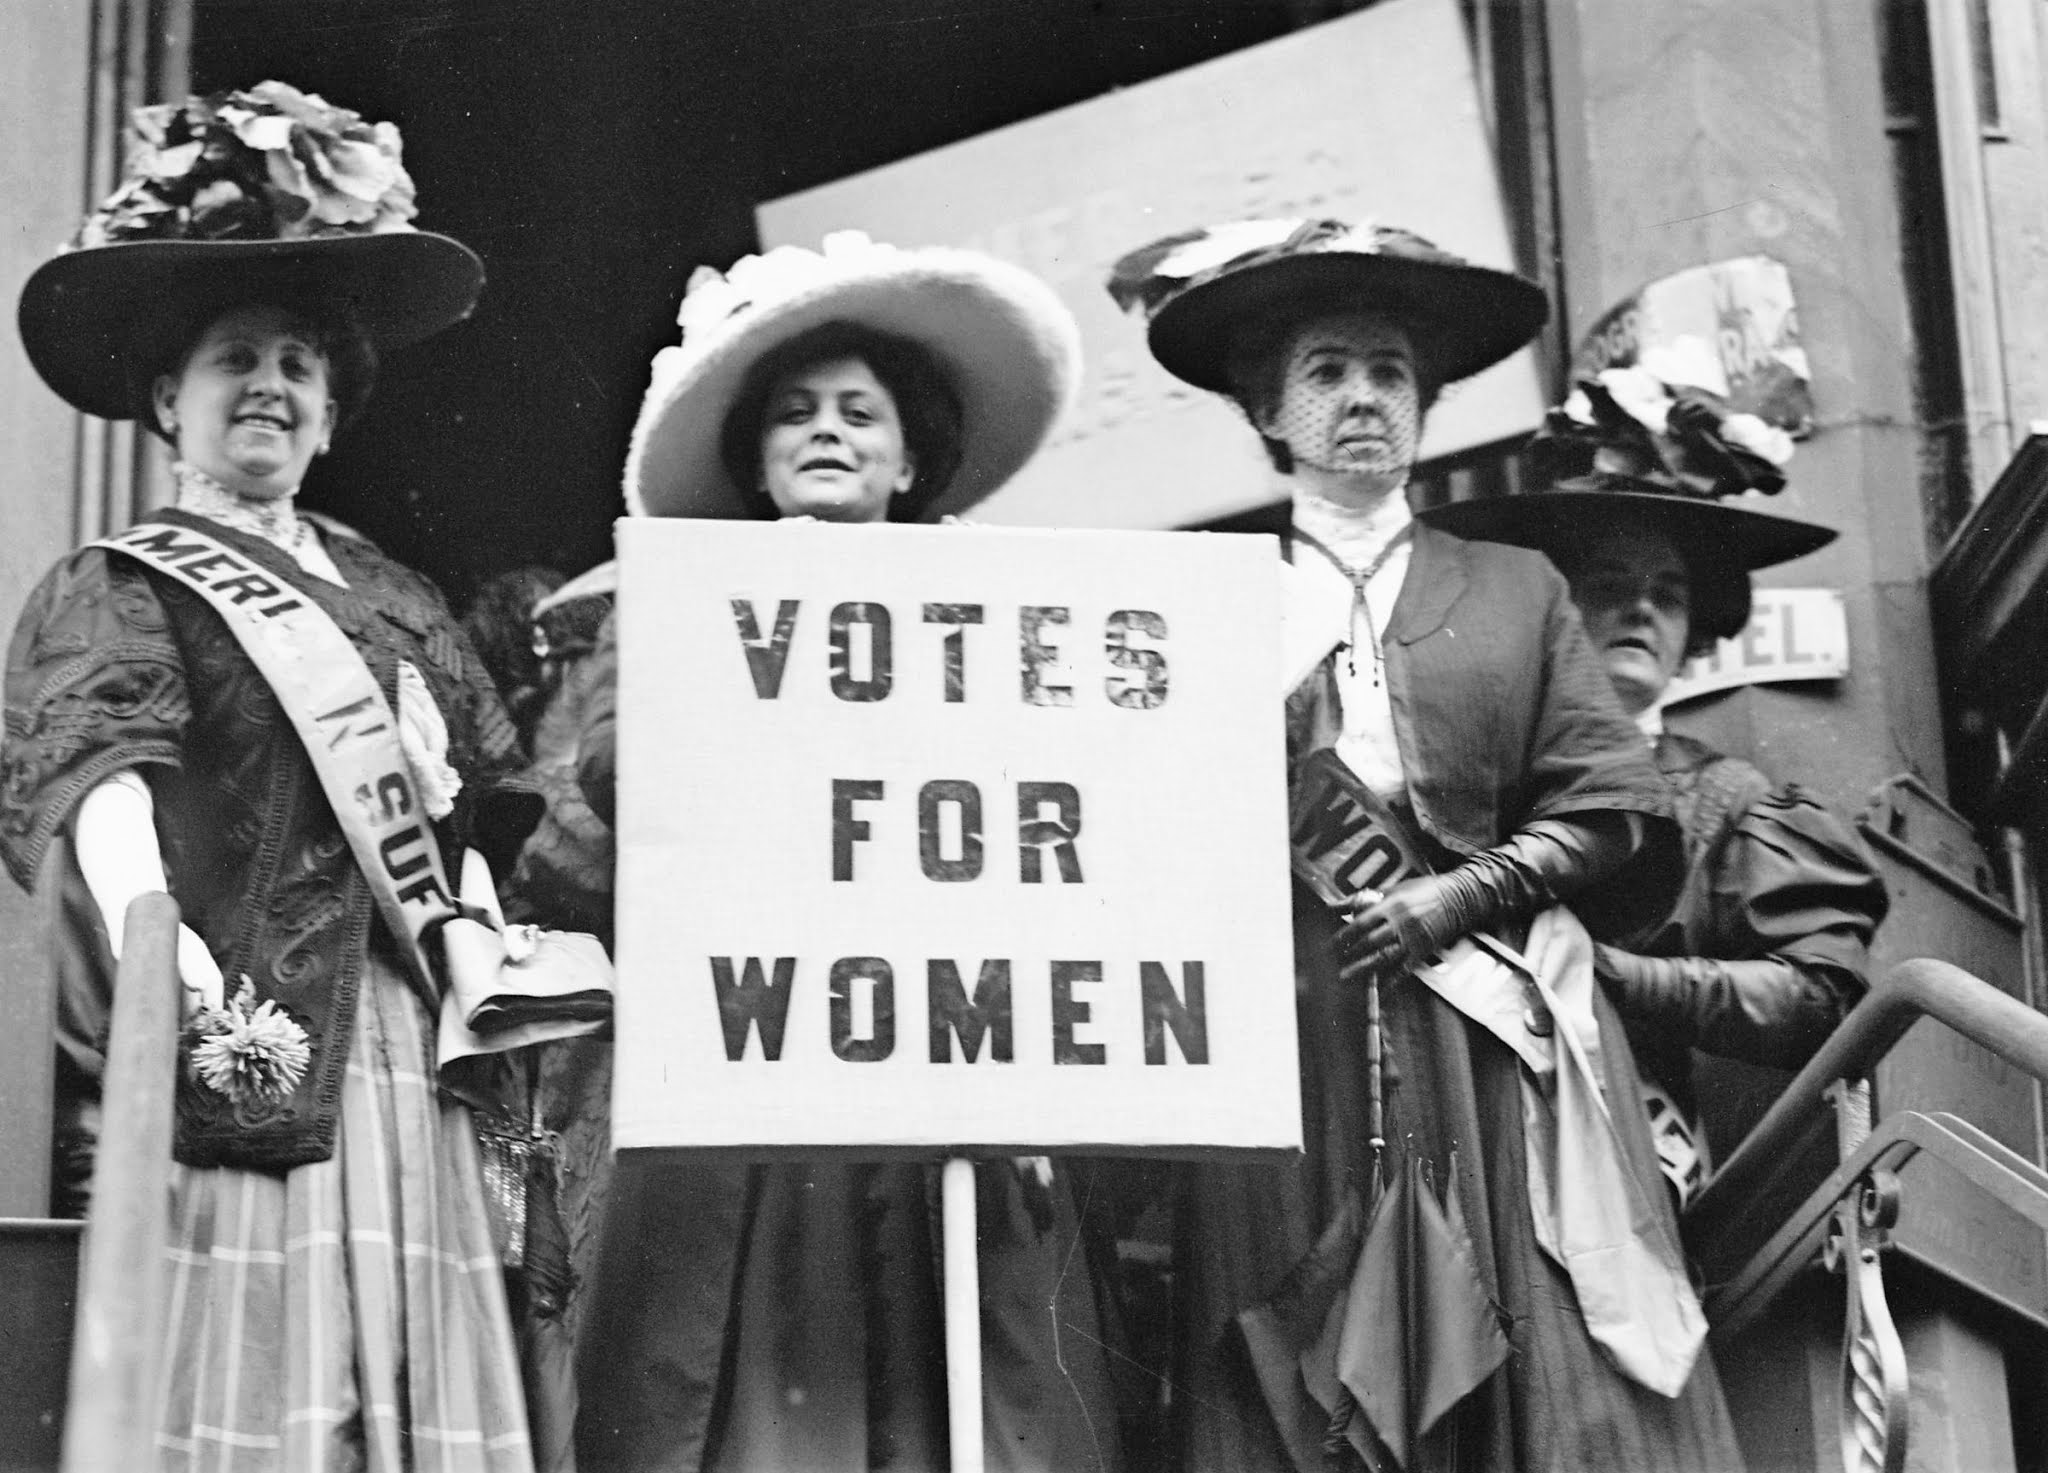 women's suffrage essay topics